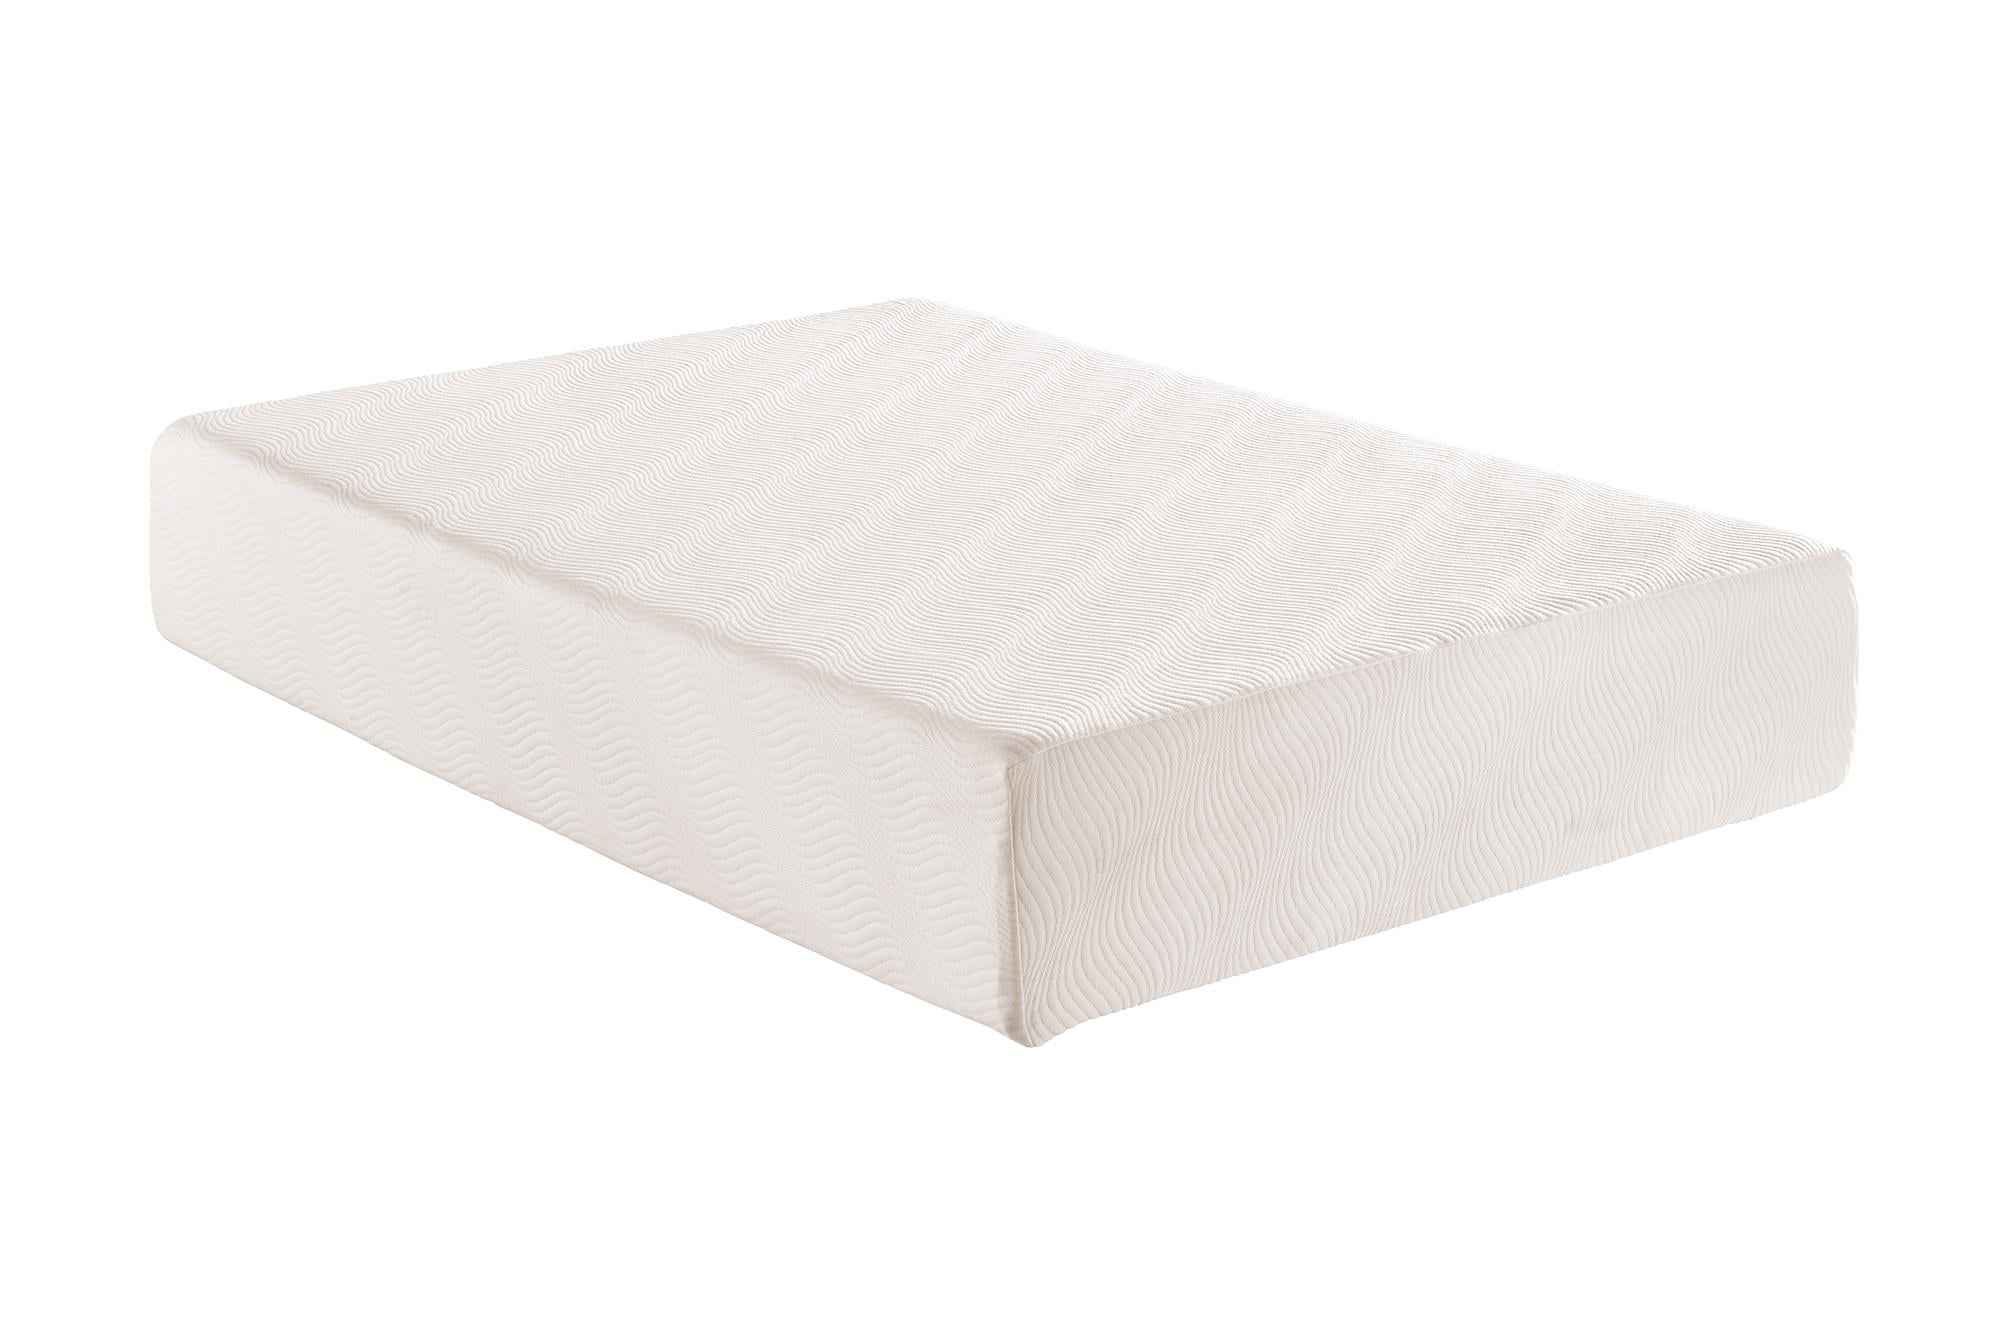 mainstays 5 zone foam mattress pad reviews